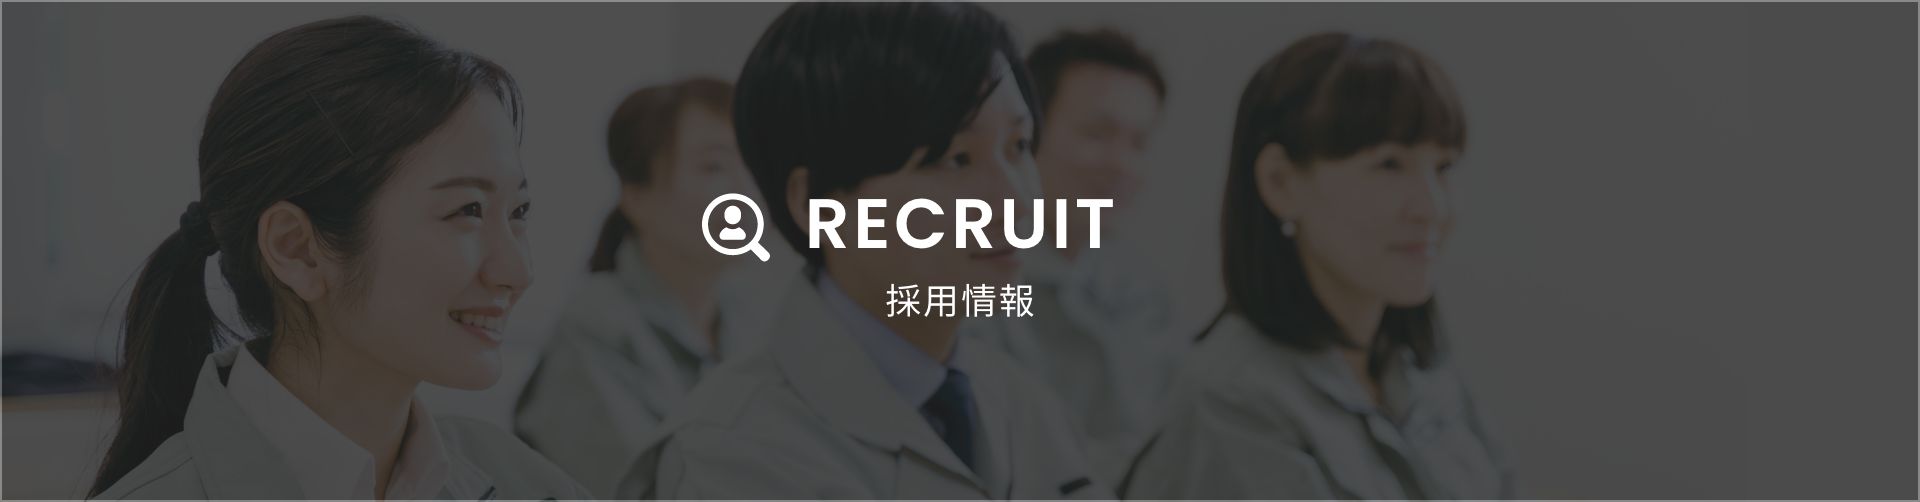 recruit 採用情報 -banner-